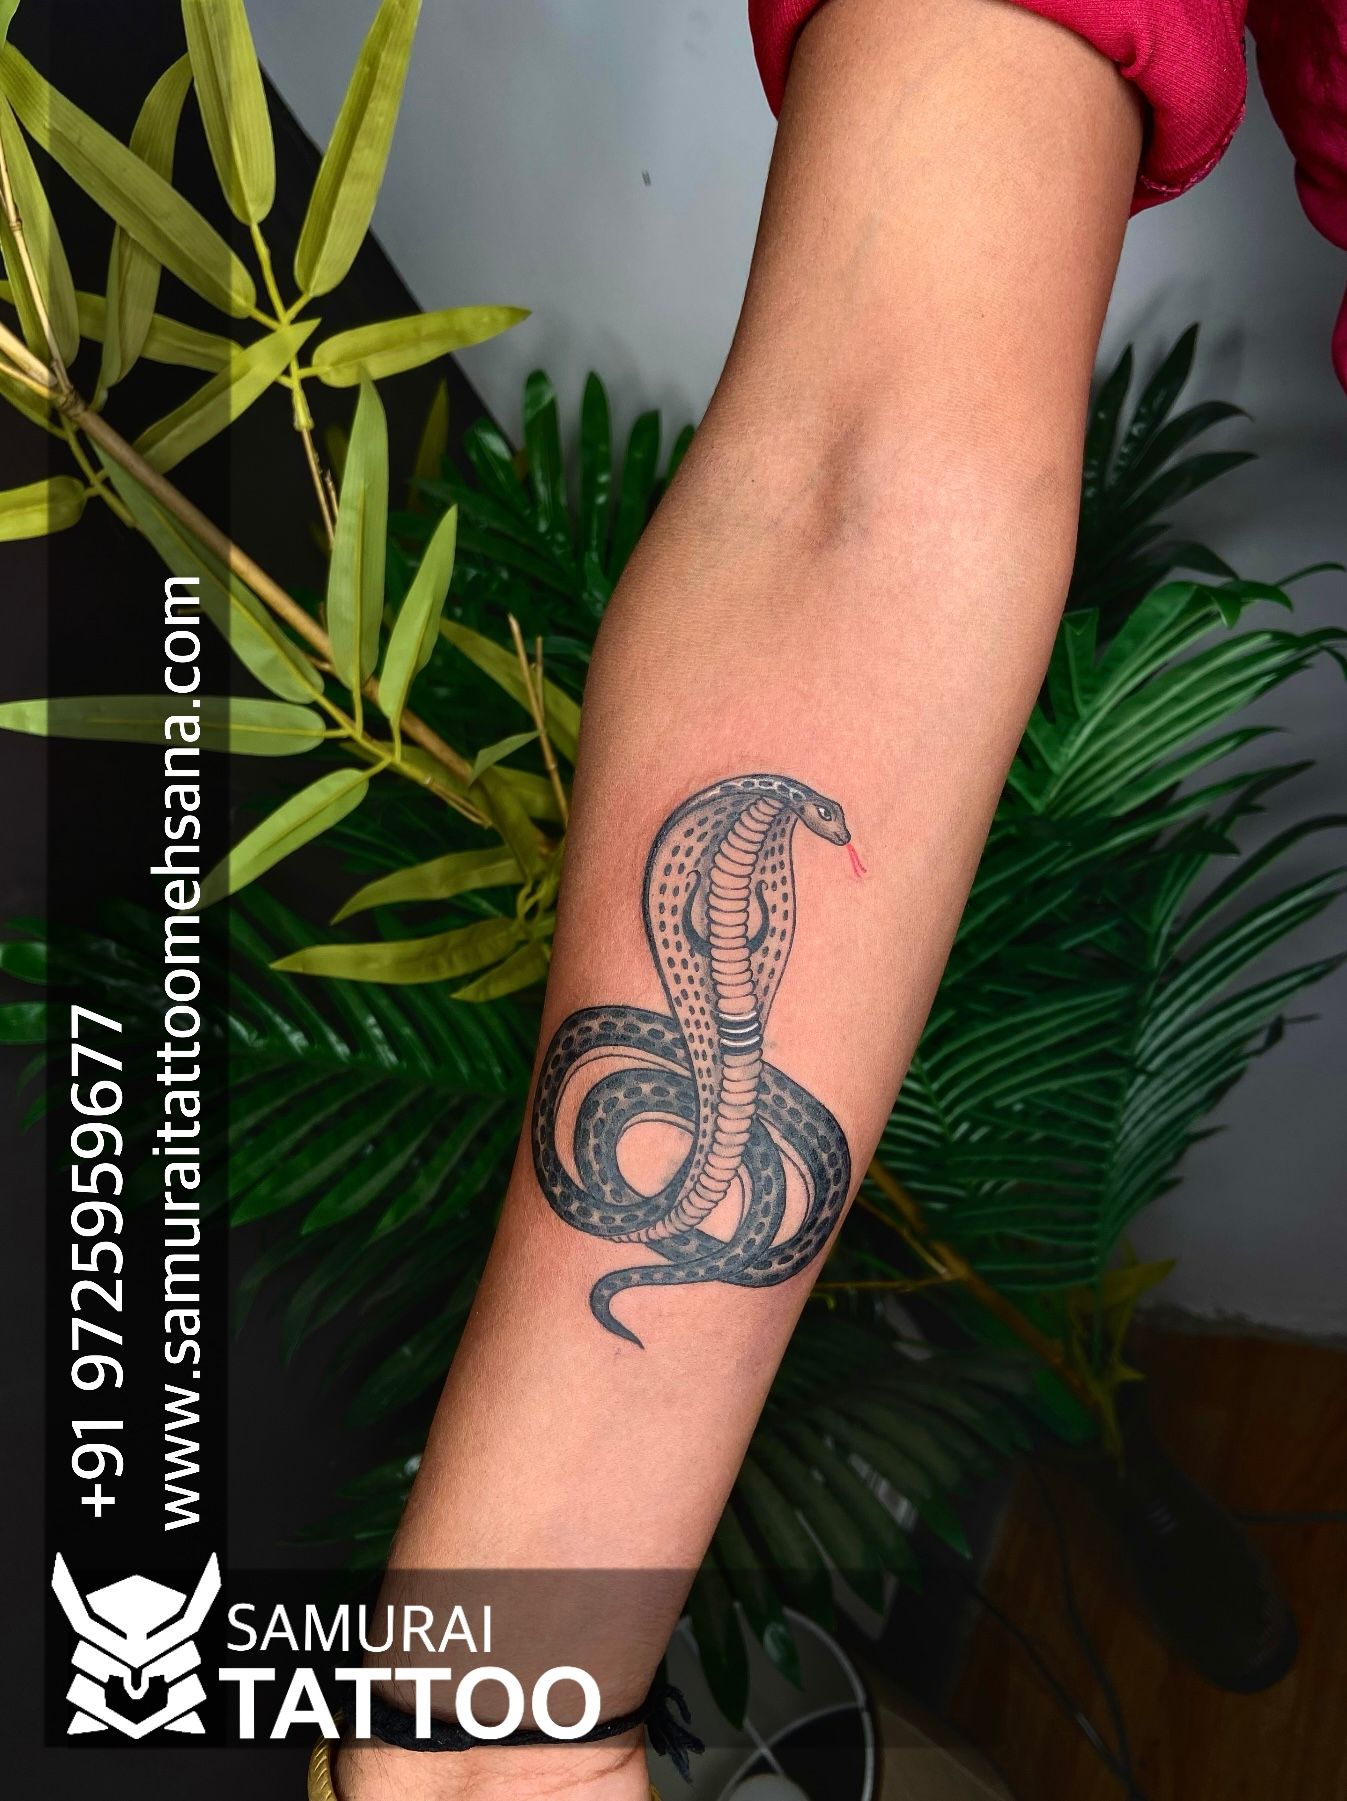 Jay Goga name tattoo with crown | Tattoos, Name tattoo, Tattoo quotes